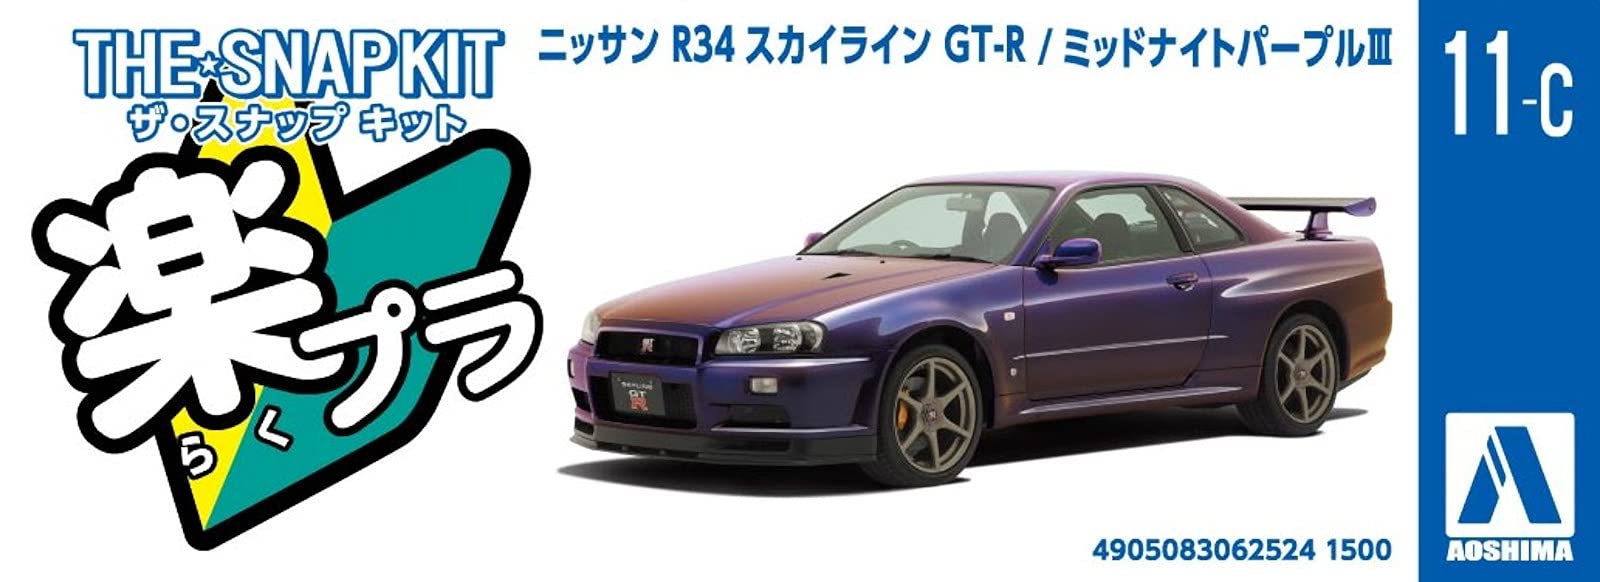 AOSHIMA The Snap Kit 1/32 Nissan R34 Skyline Gt-R Midnight Purple Lll Plastikmodell